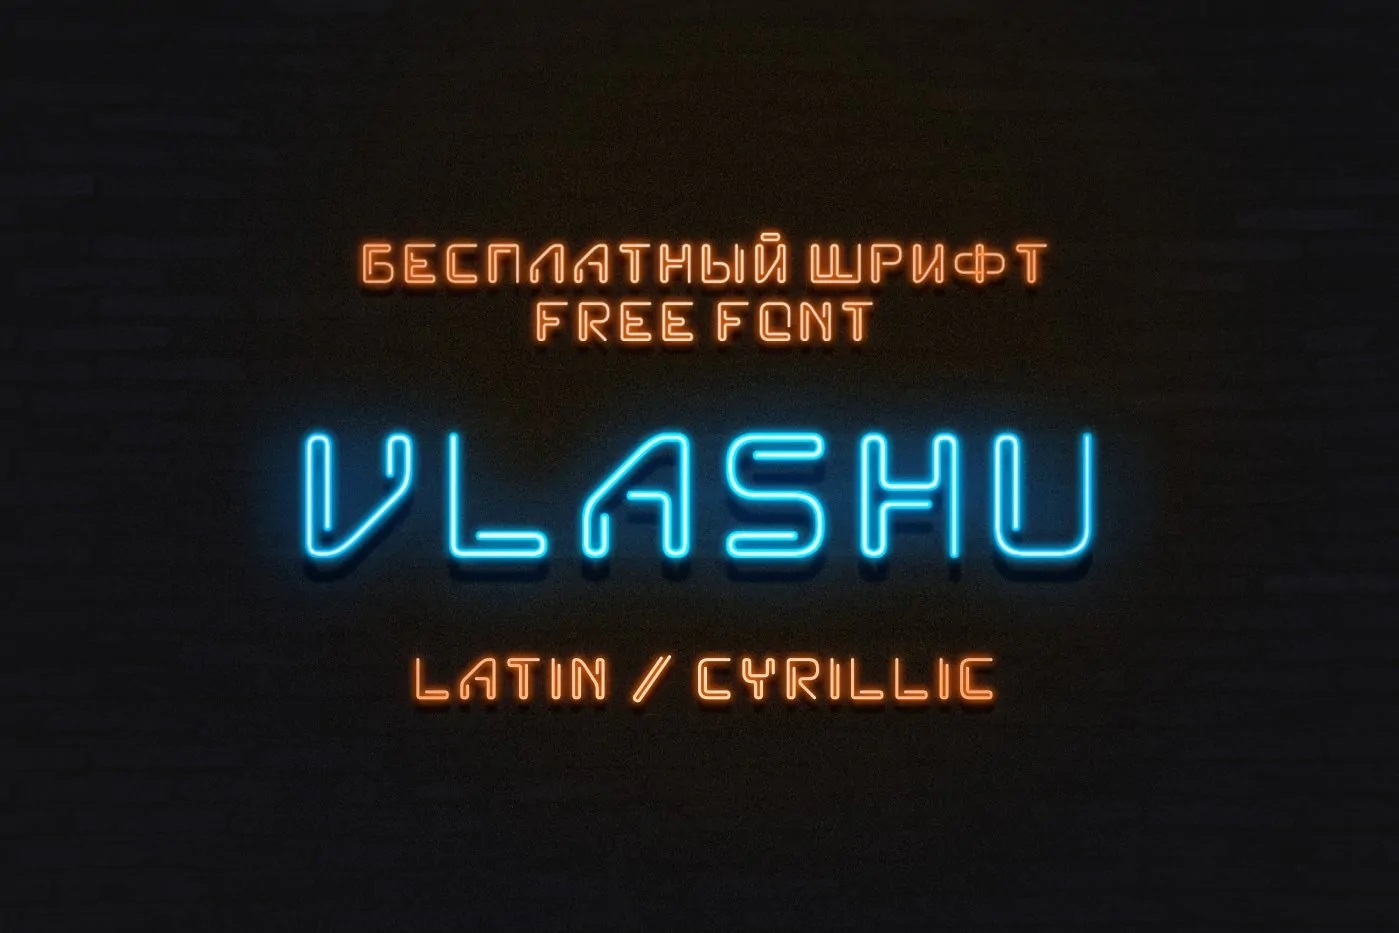 Шрифт — Vlashu (Кириллица, Латиница)